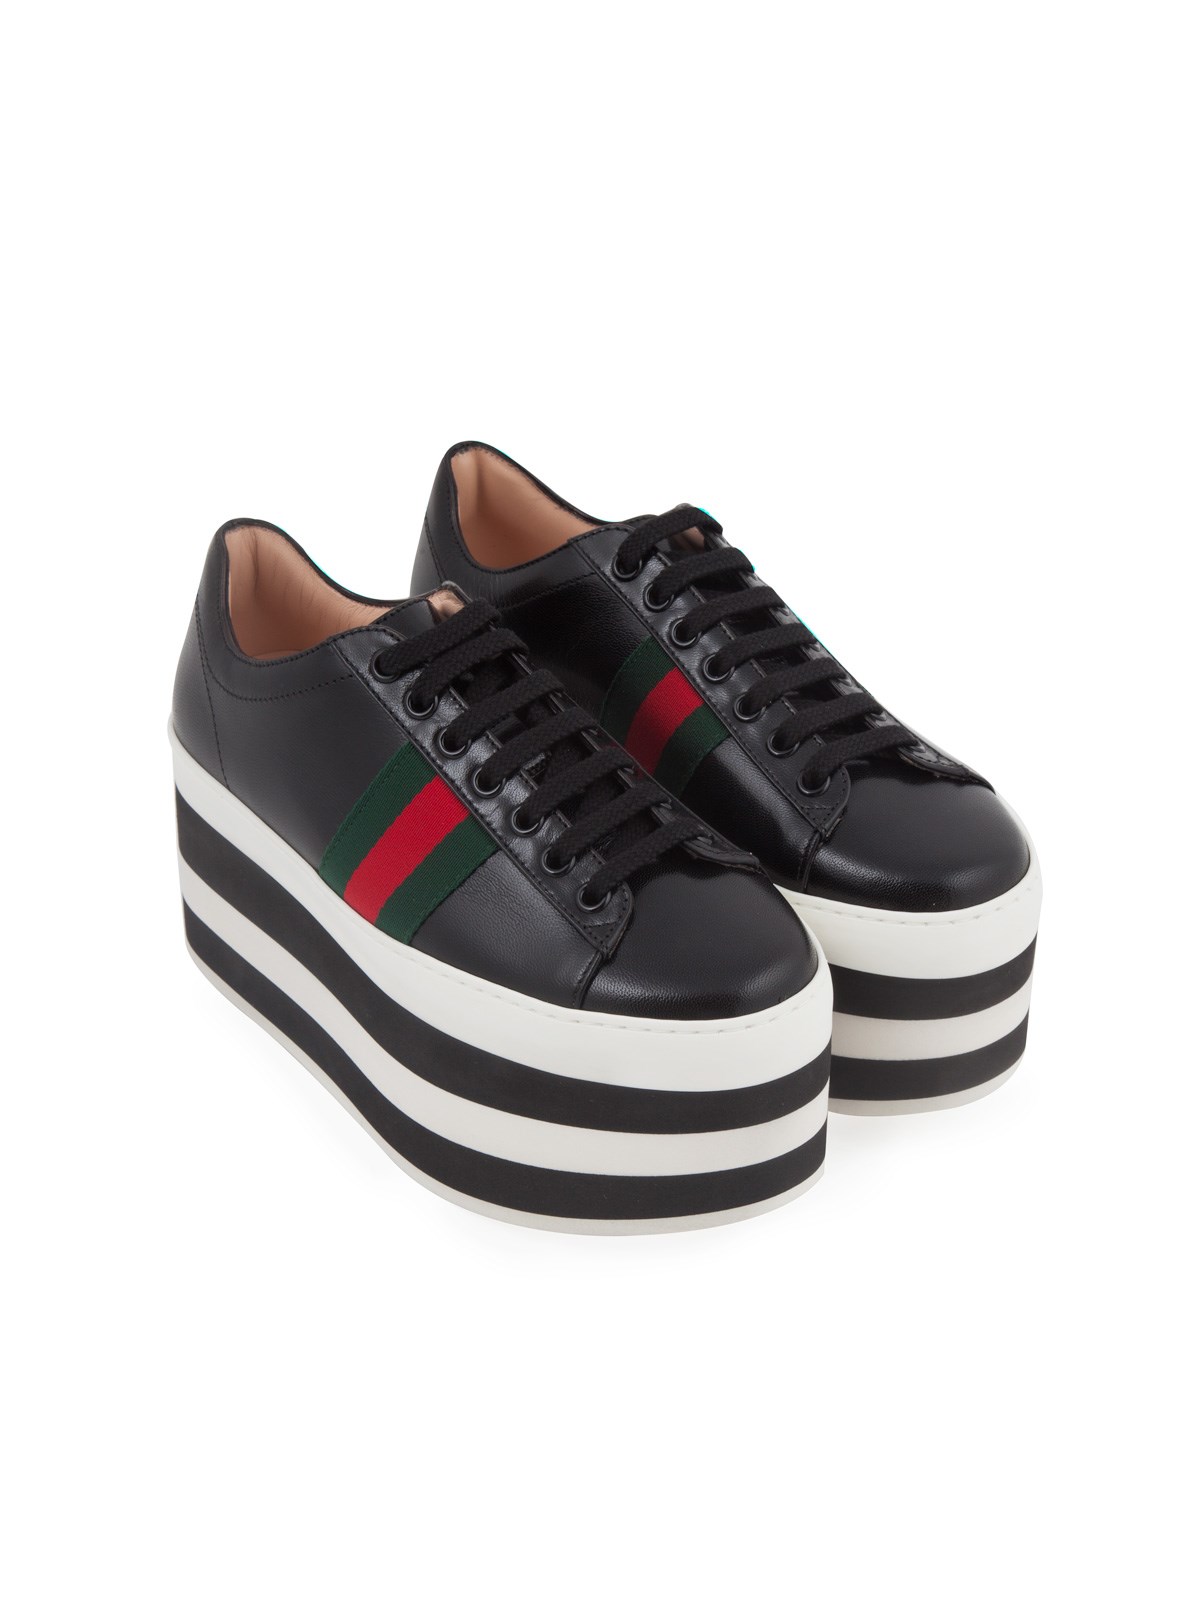 gucci platform sneakers black